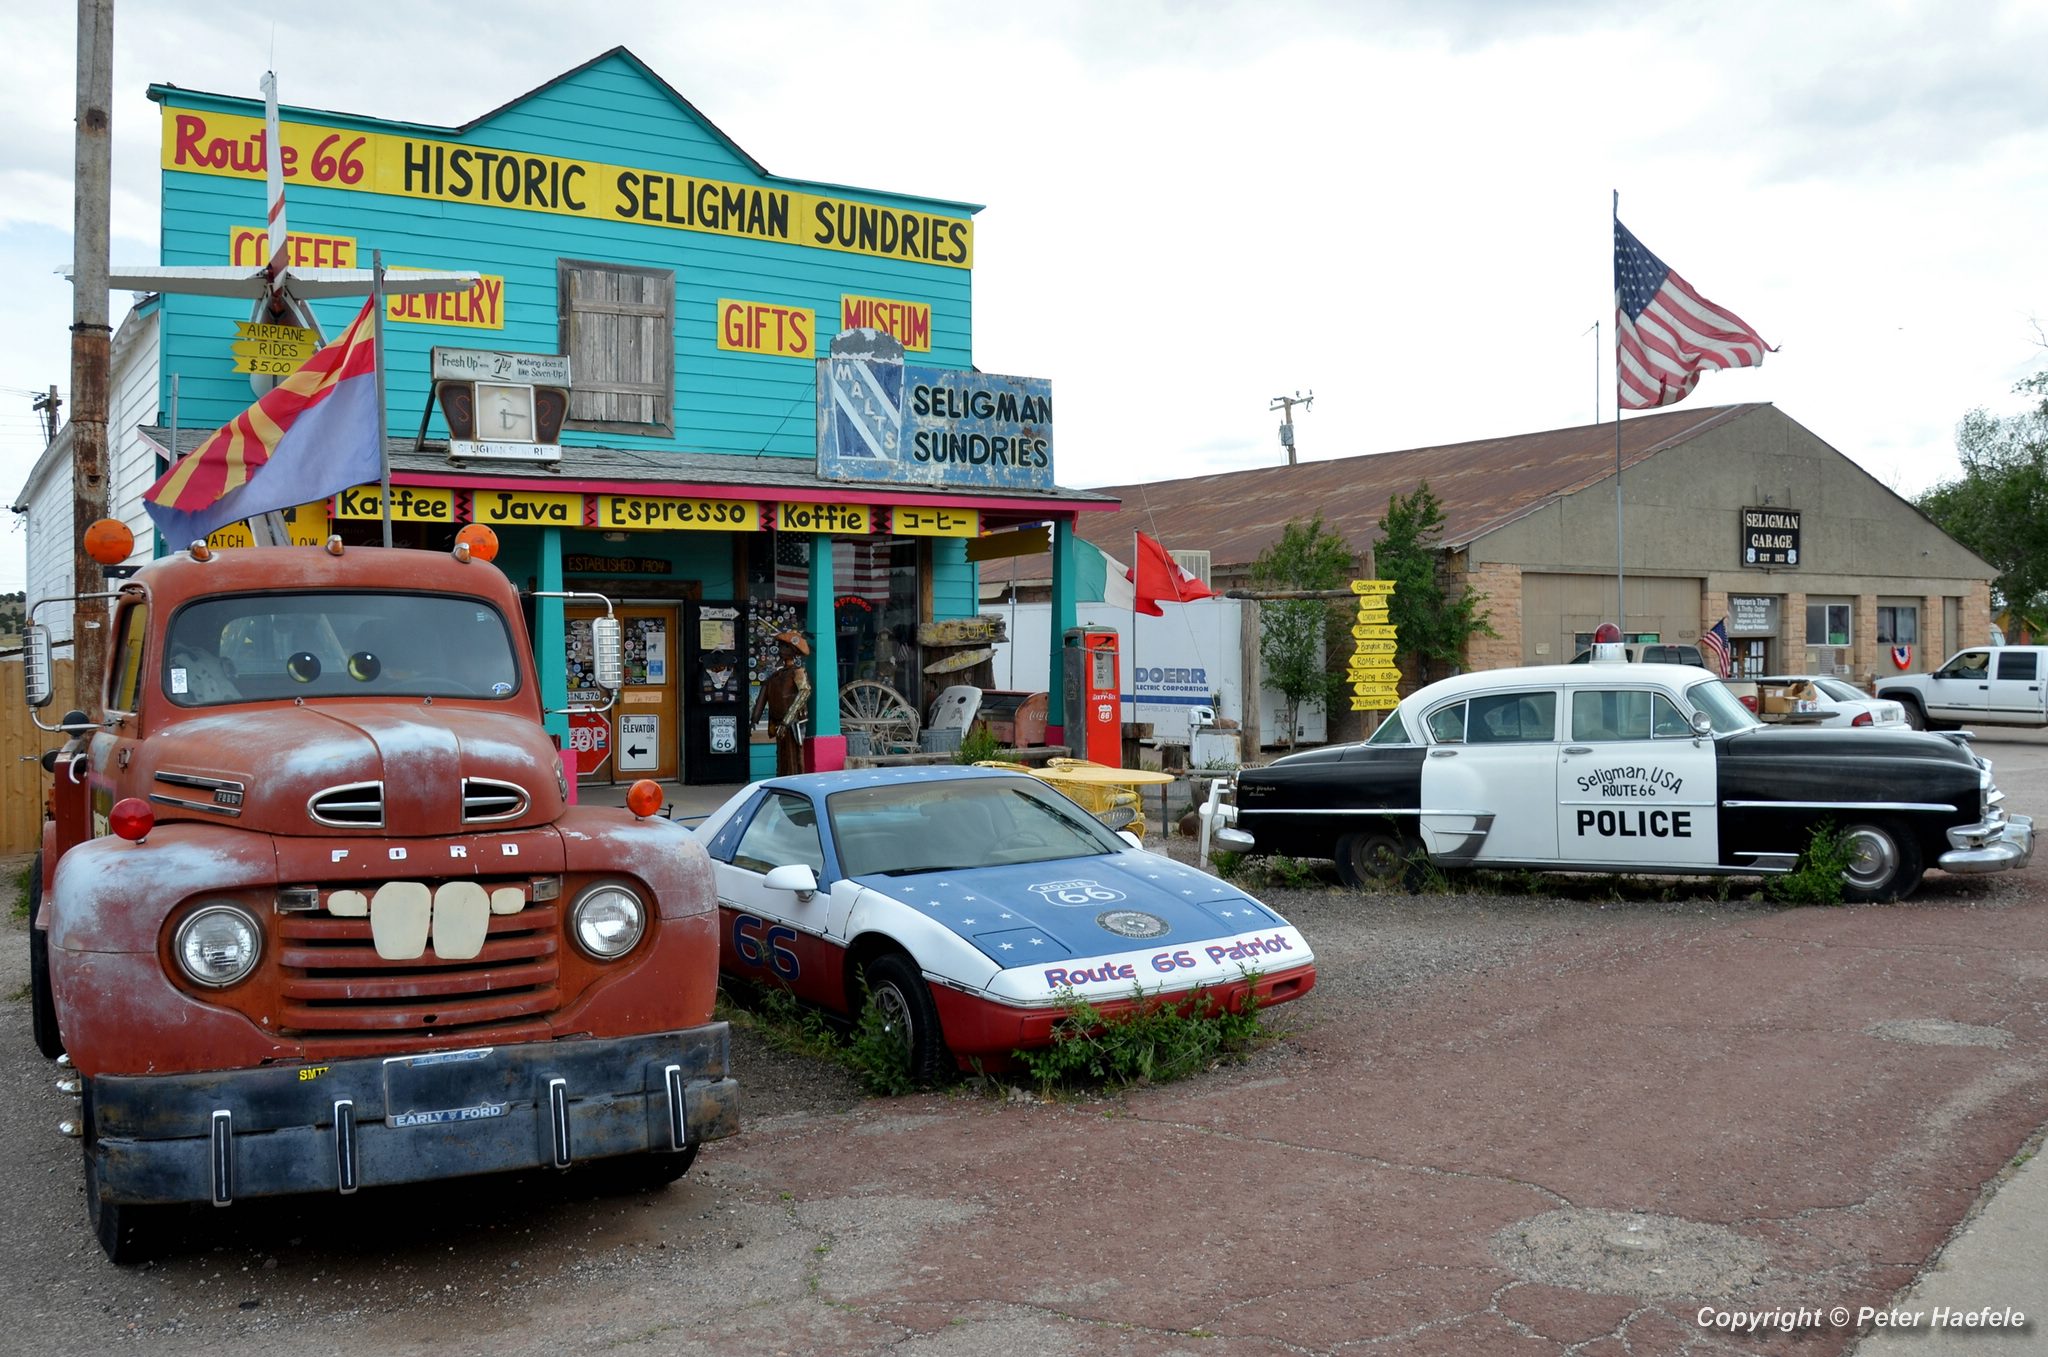 Roadtrip USA - Seligman - Birthplace of Historic Route 66